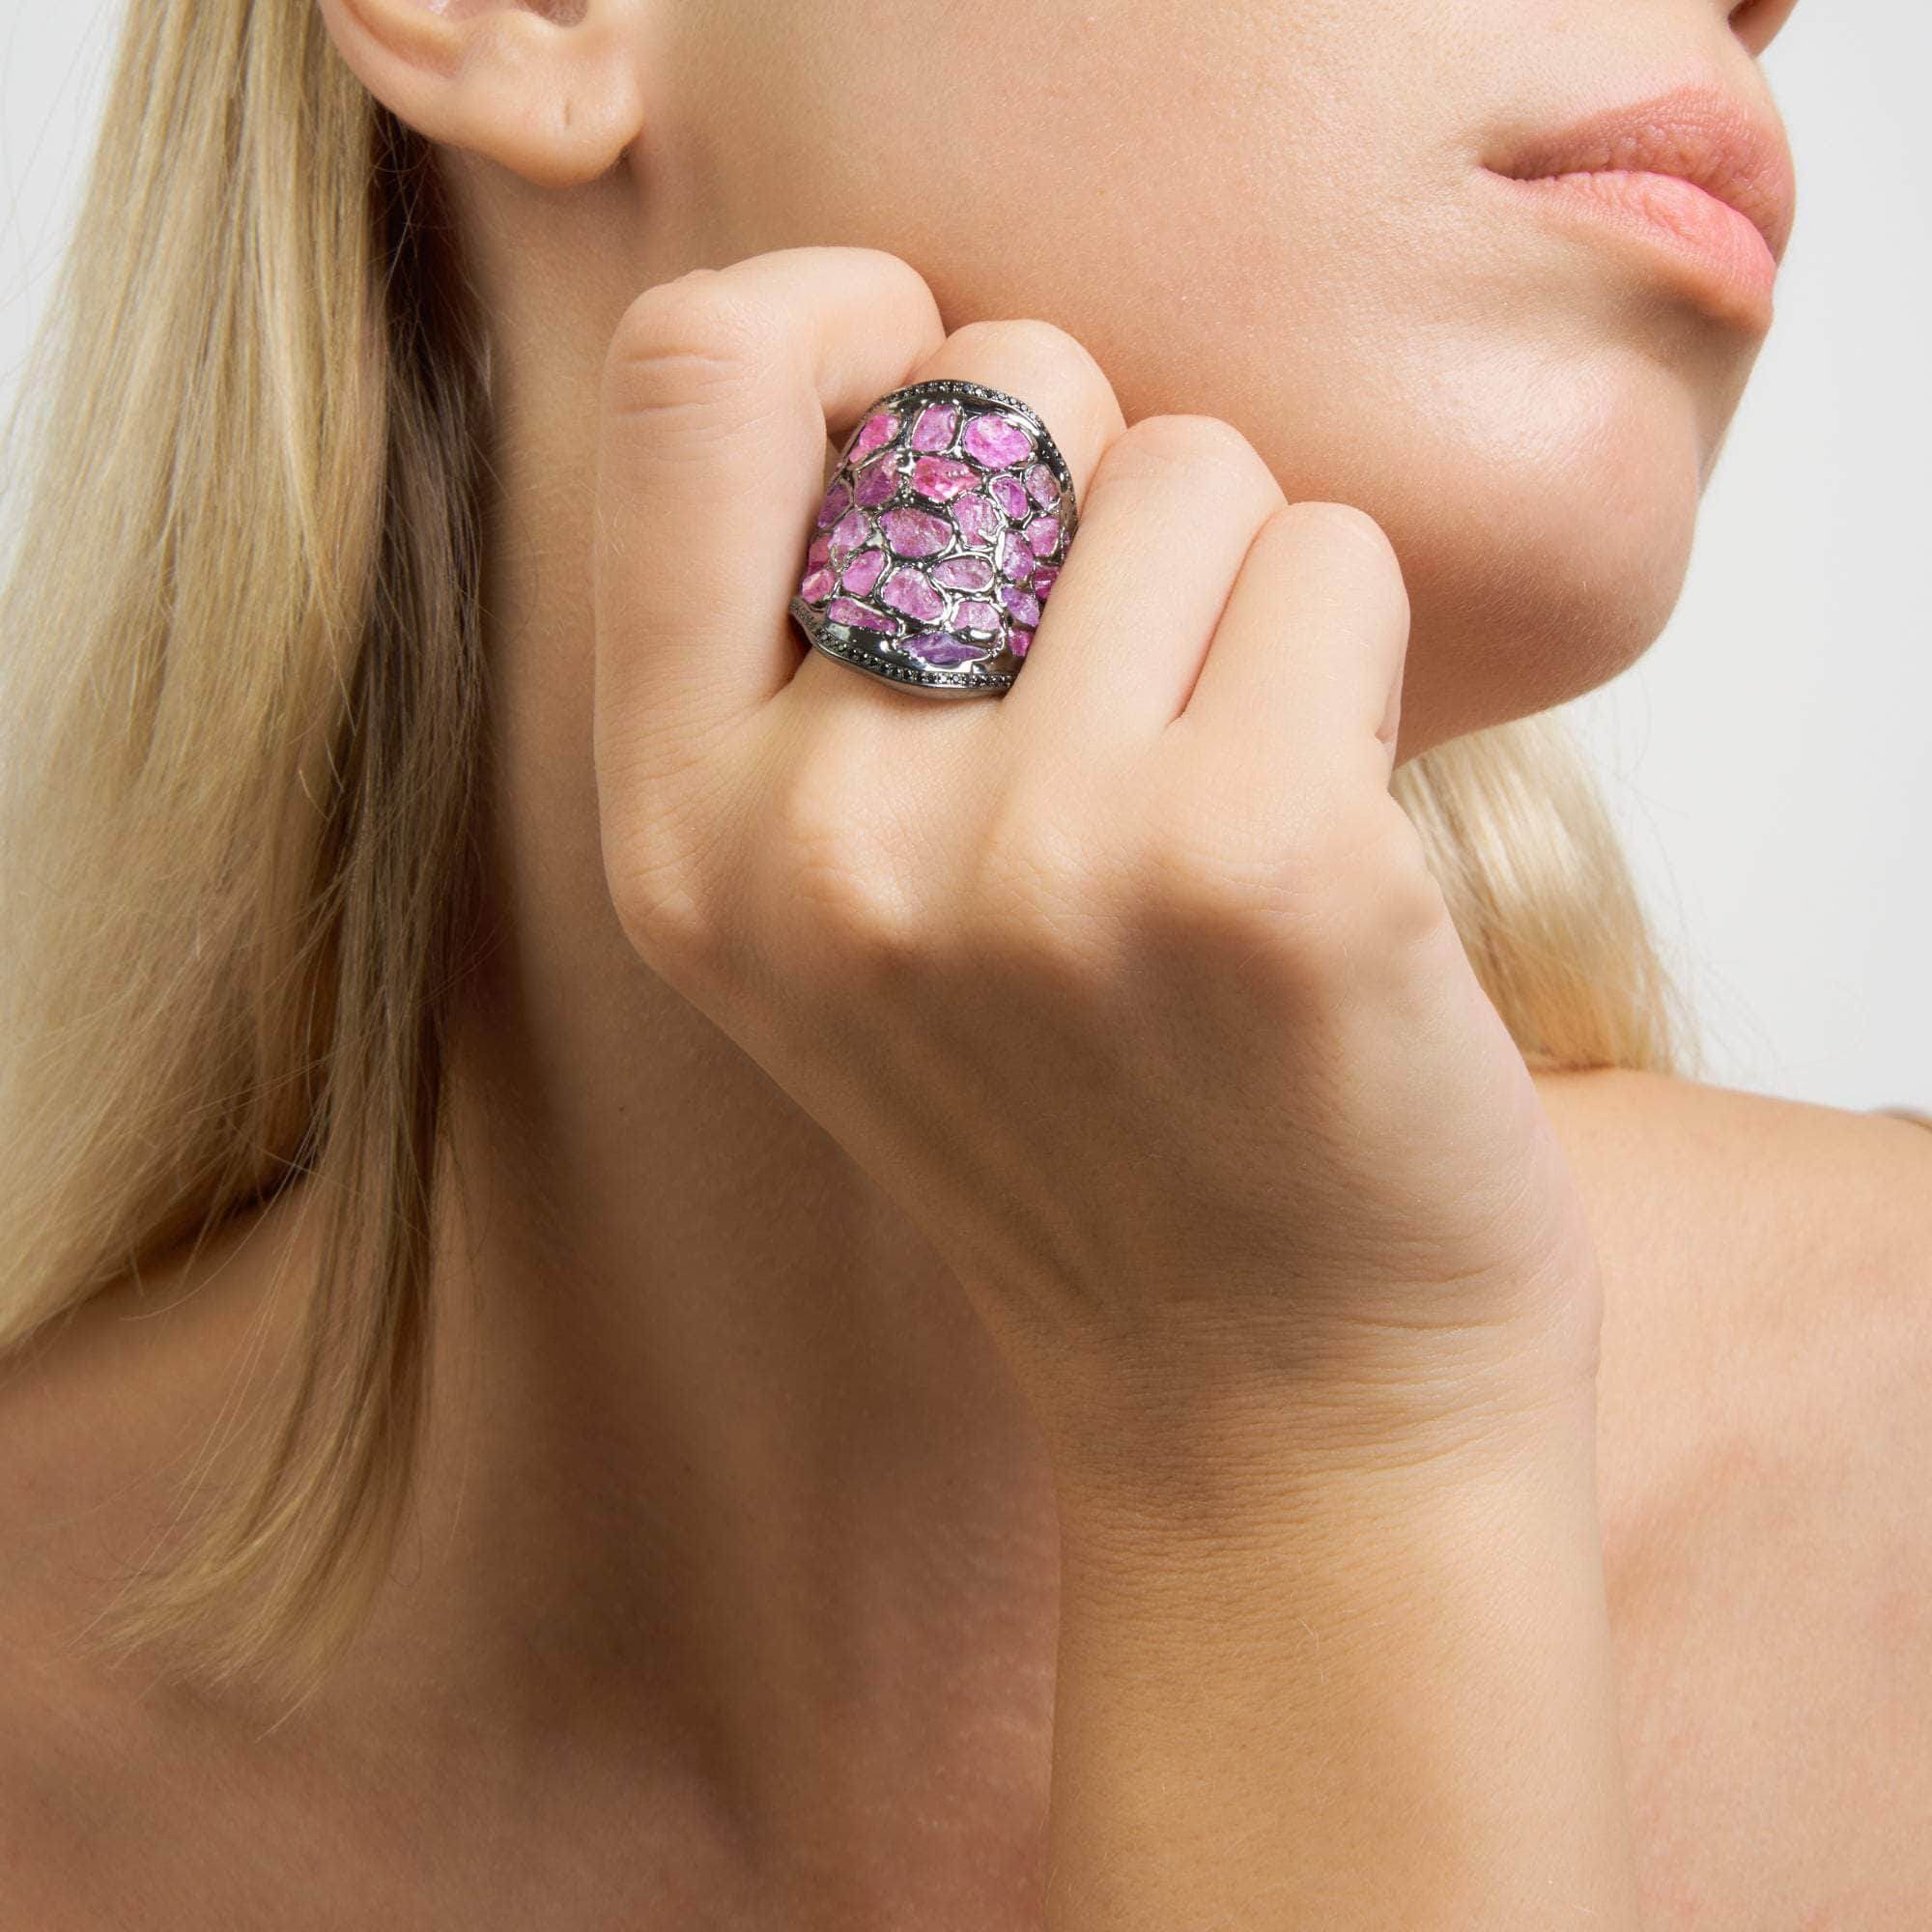 Cosm Rough Pink Sapphire and Black Spinel Ring GERMAN KABIRSKI